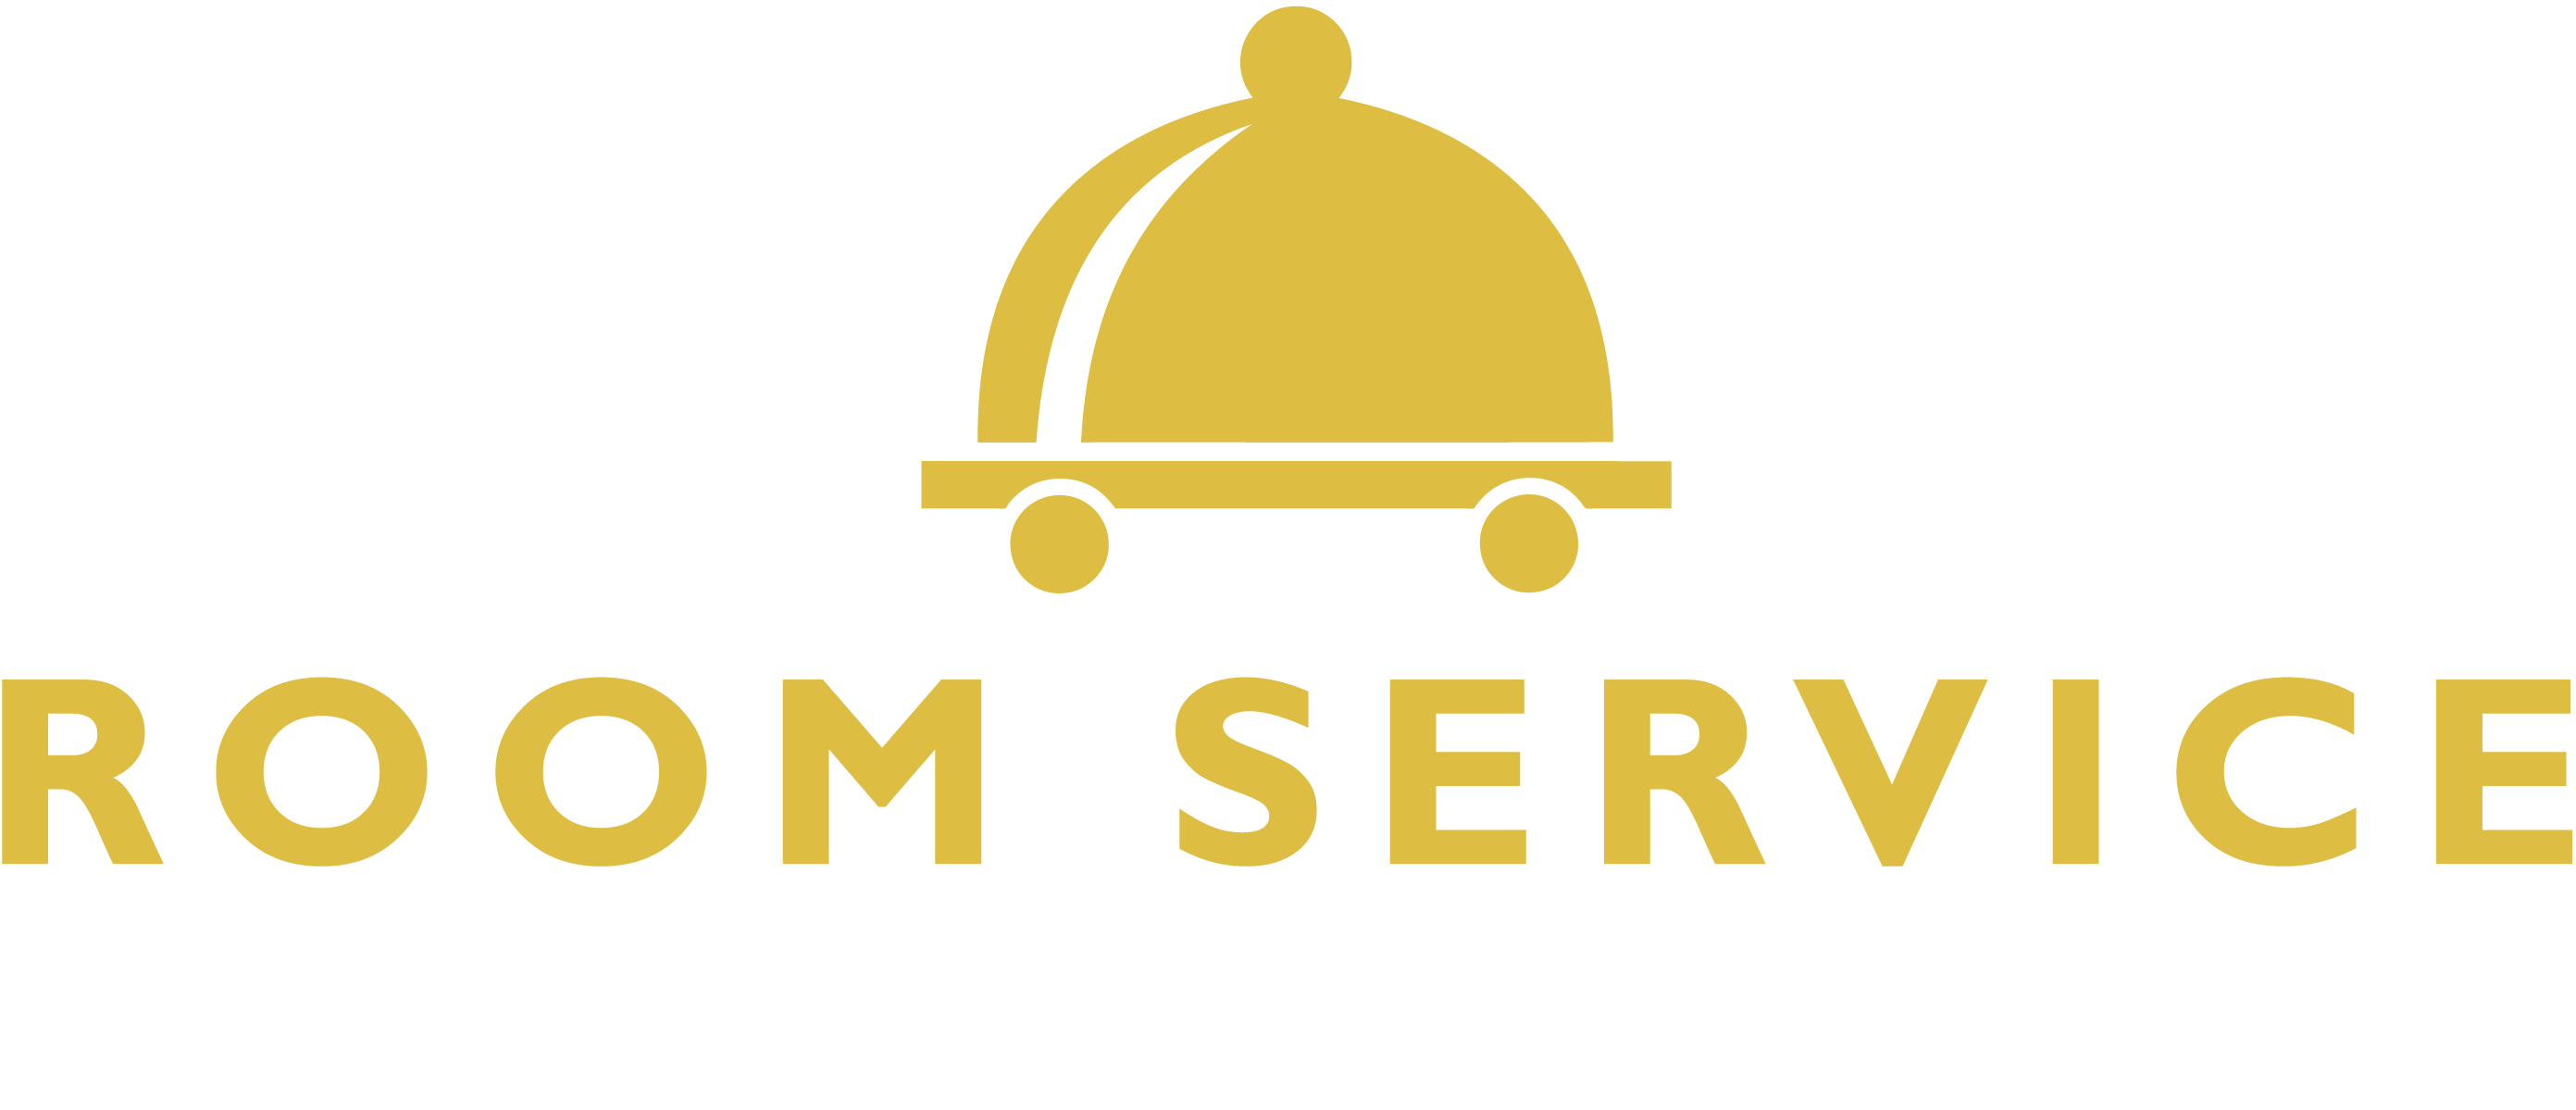 Room service top bar logo